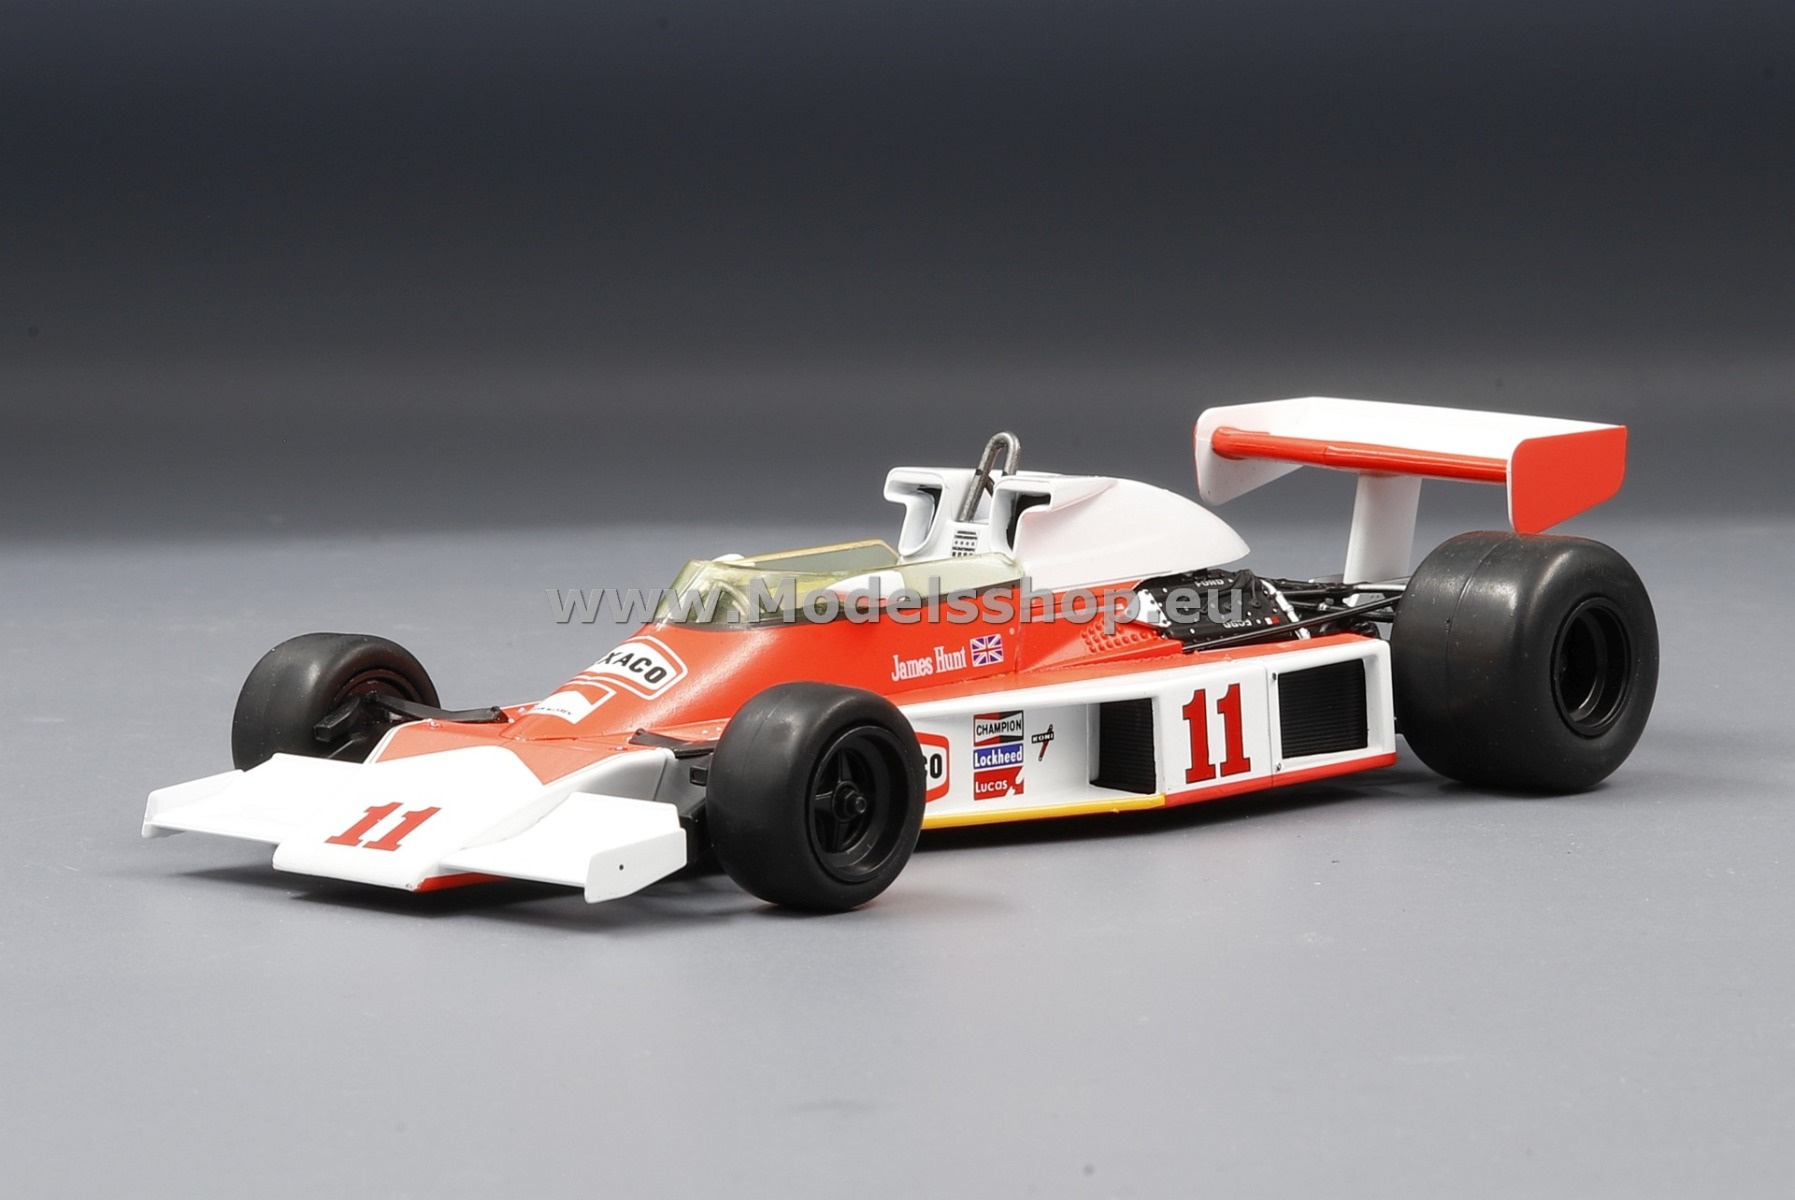 IXO24F001 McLaren M23-Ford, No.11, Marlboro, Formula 1, GP Canada 1976 (with Decals), J.Hunt